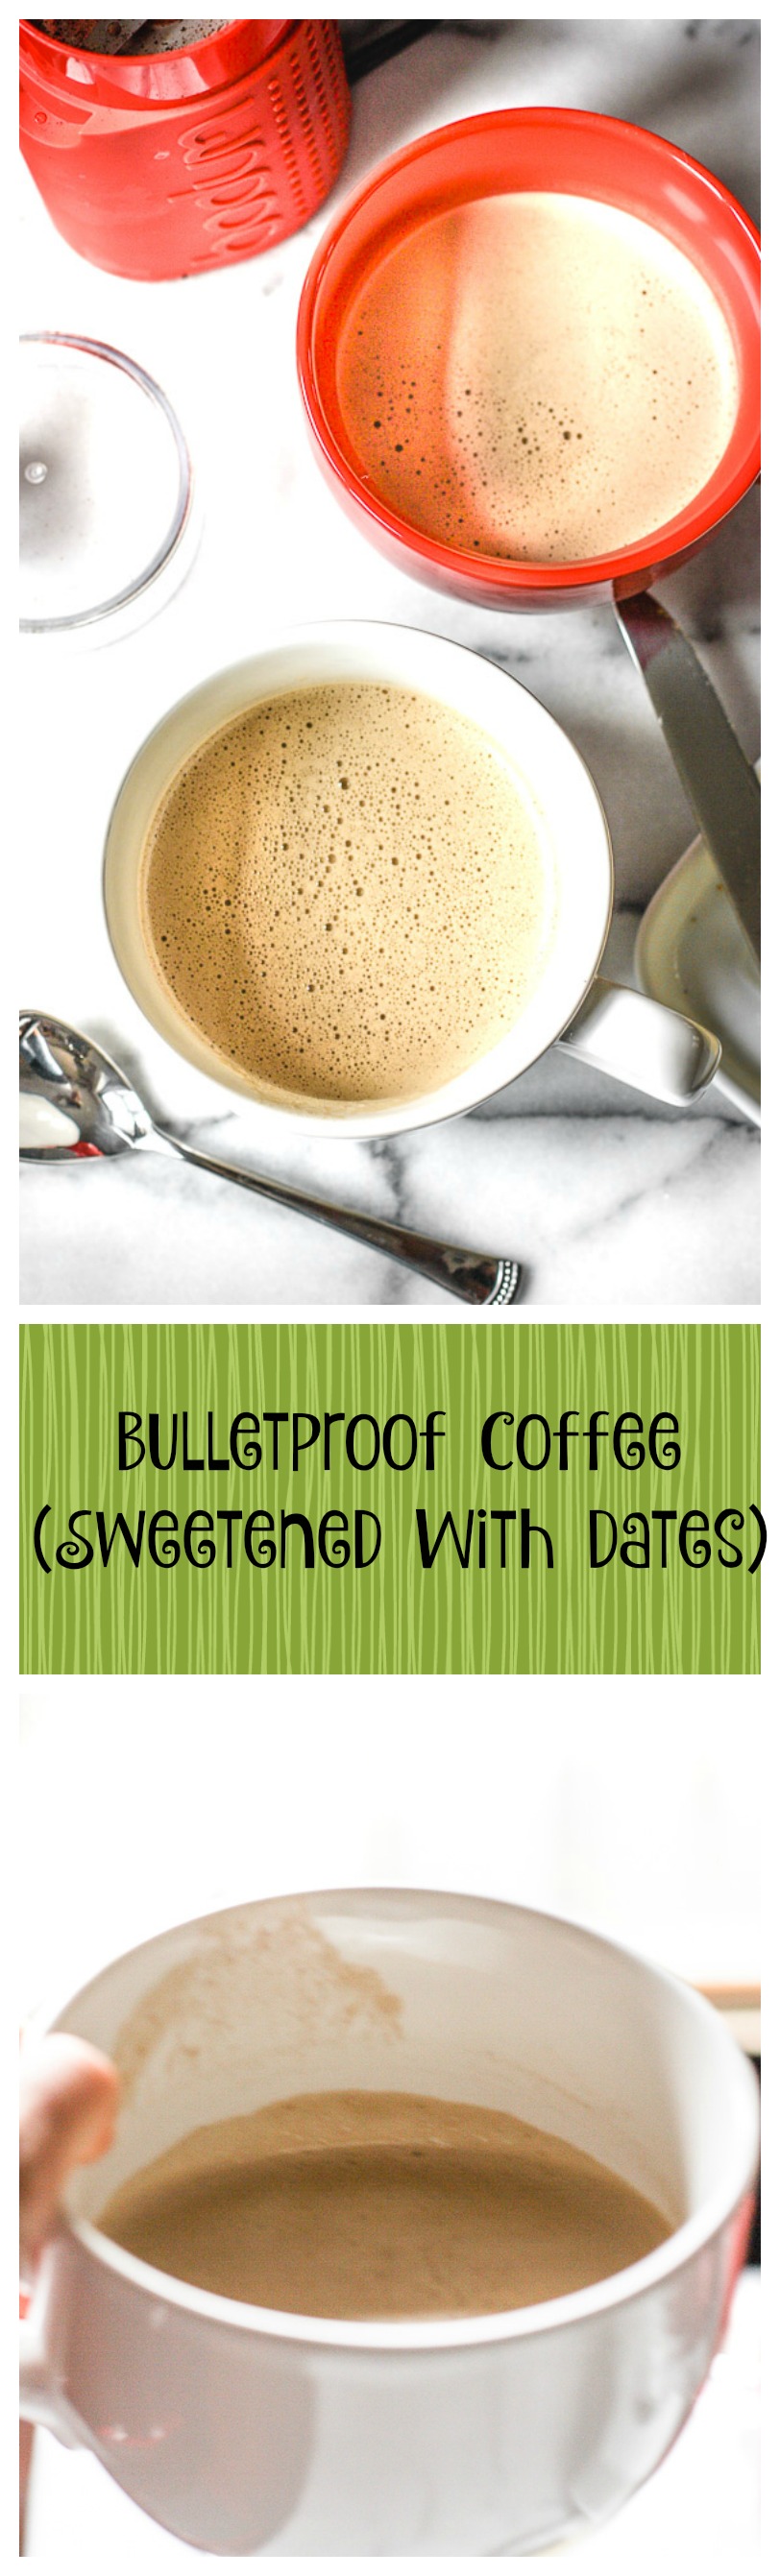 bulletproof coffee sweetened with dates